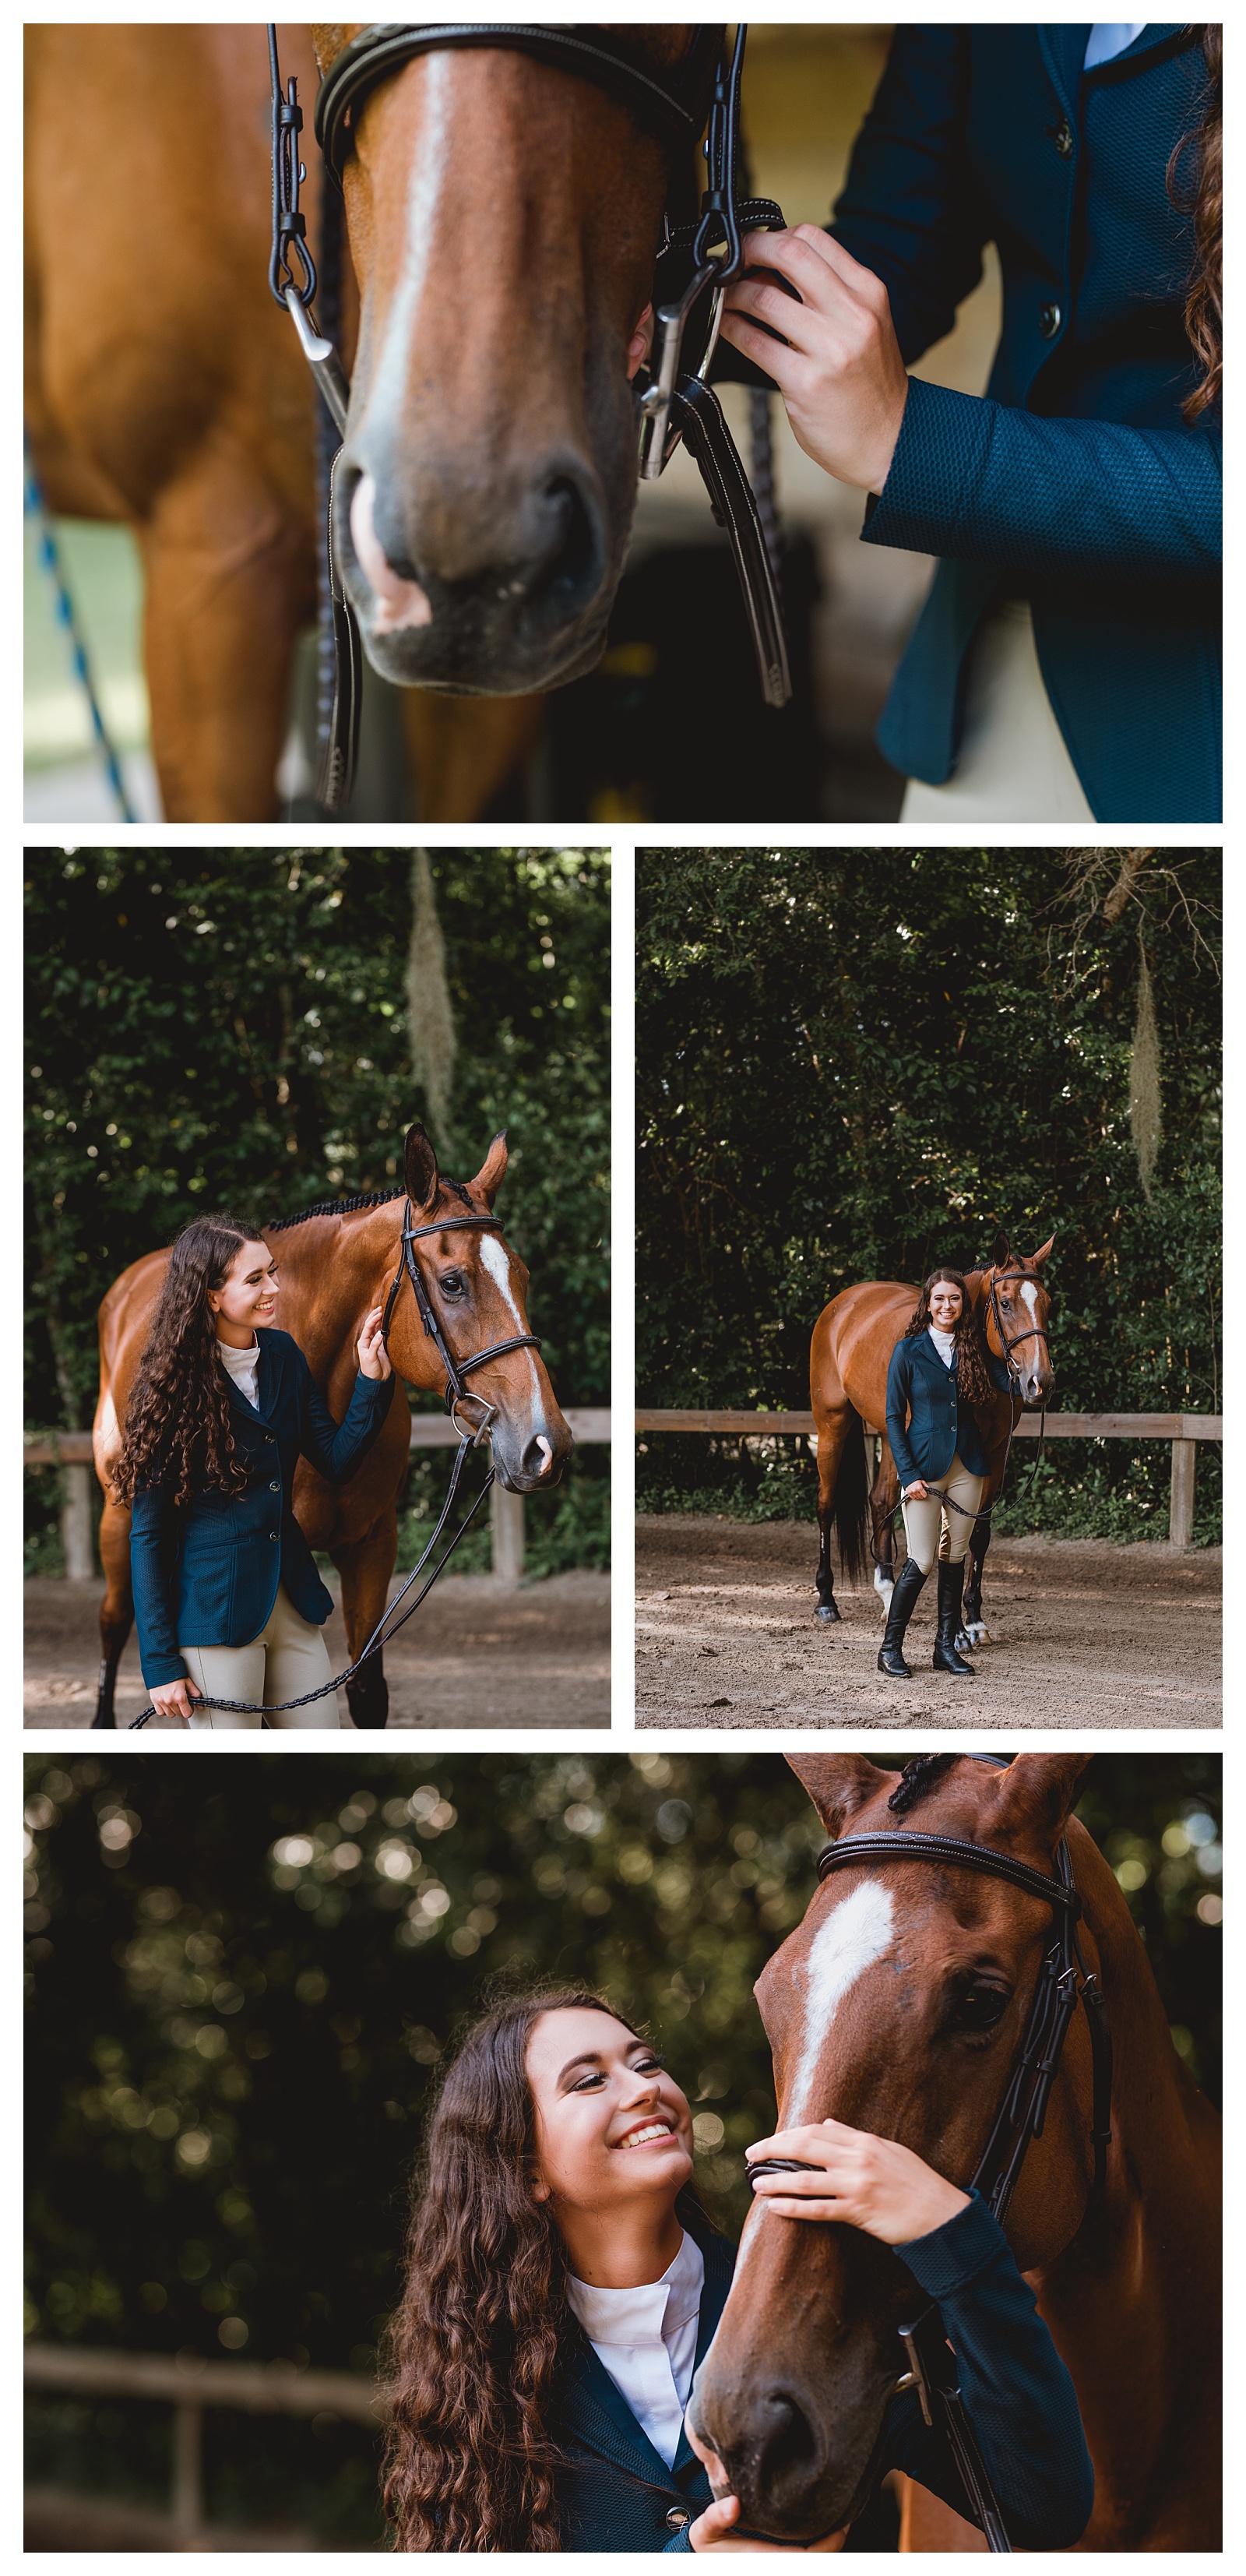 North Florida equestrian photos in Gainesville, FL 